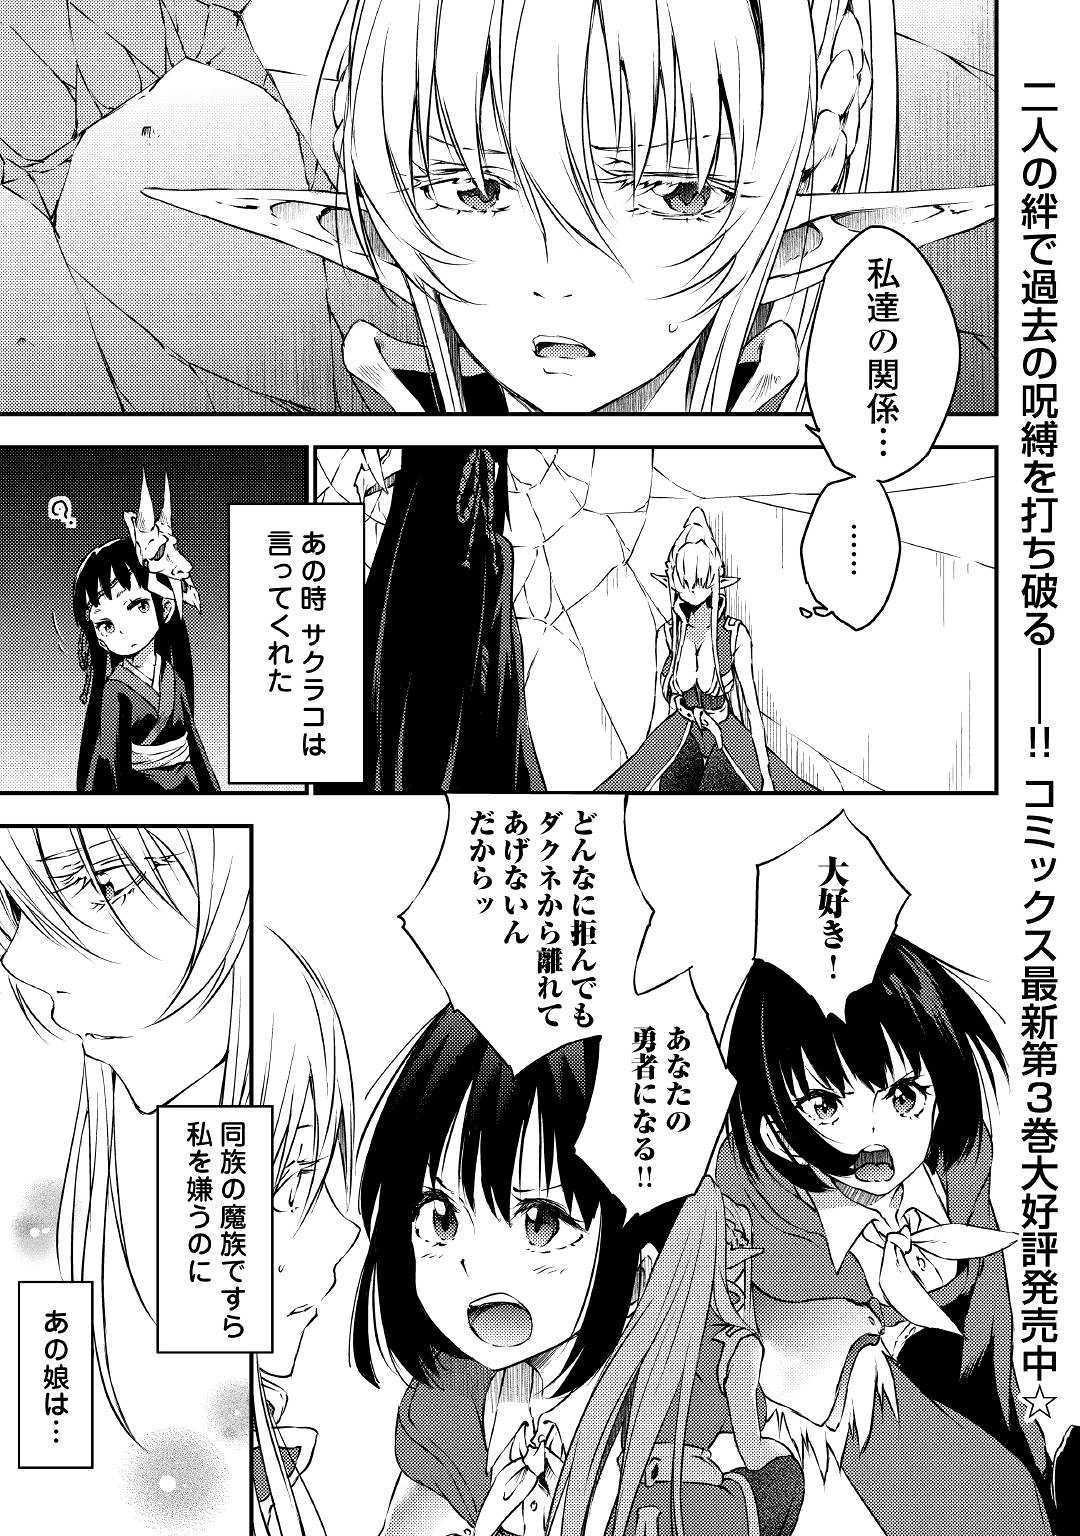 Yuusha no Mago to Maou no Musume - Chapter 18 - Page 1